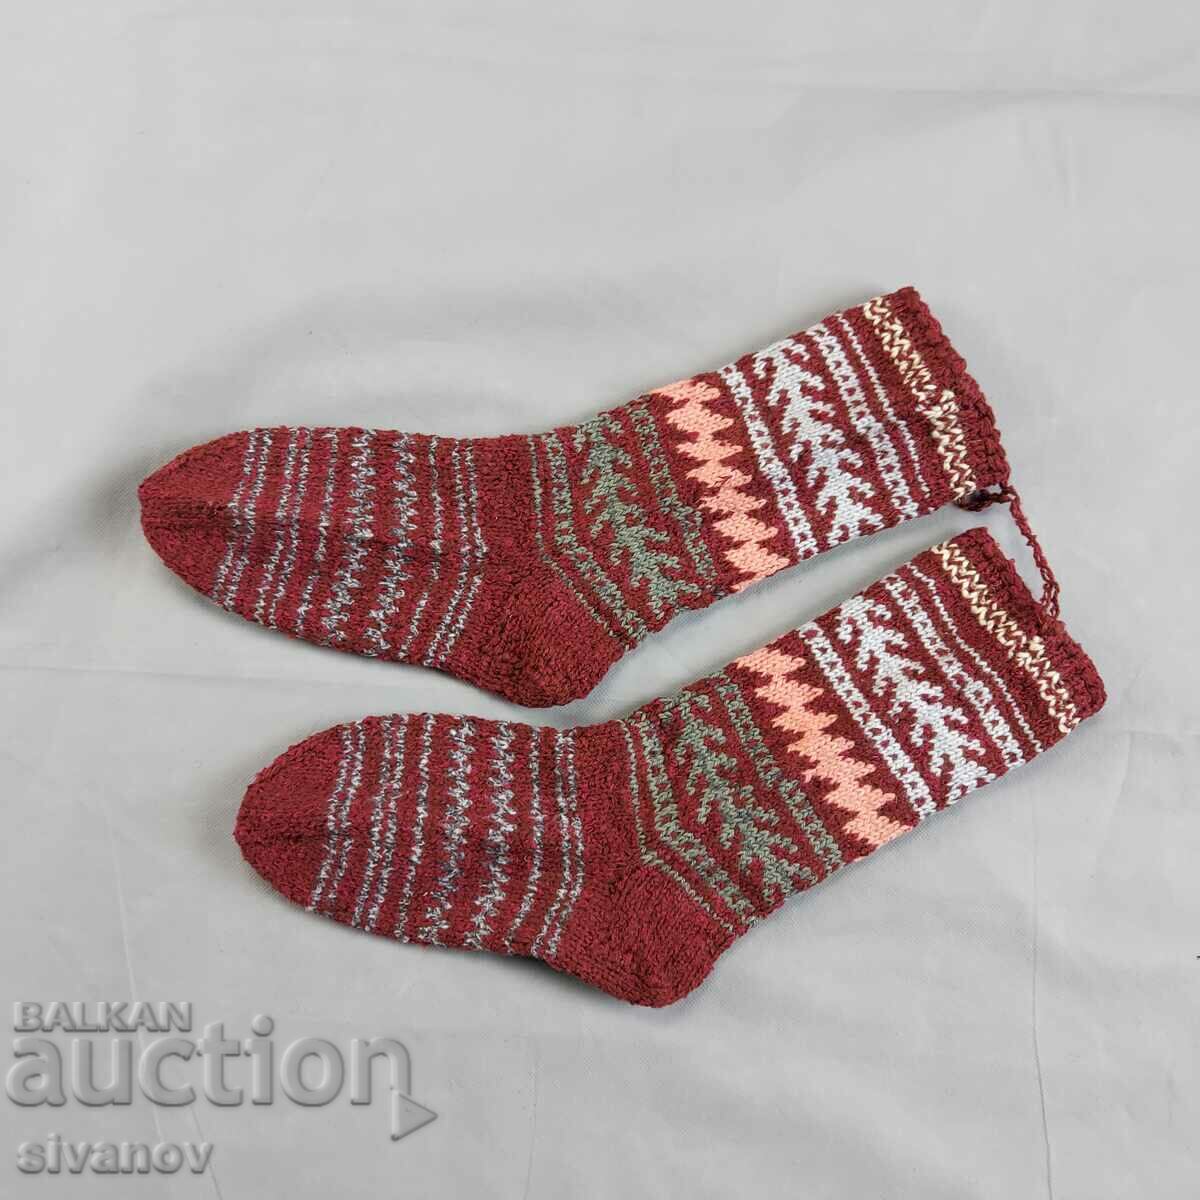 Wool socks for ethnic folklore costume #2356